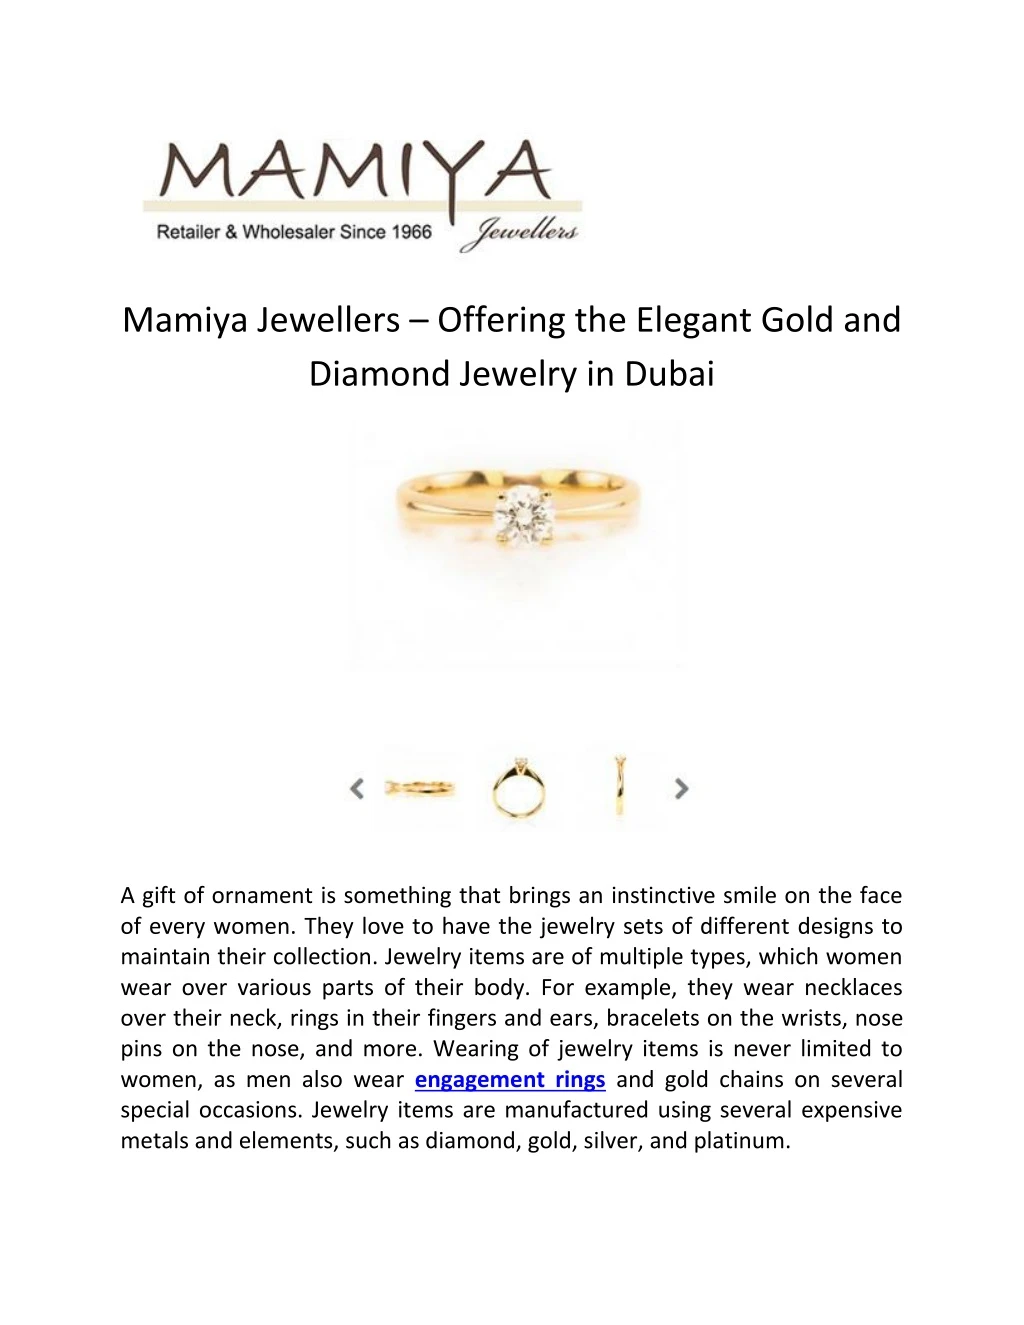 mamiya jewellers offering the elegant gold